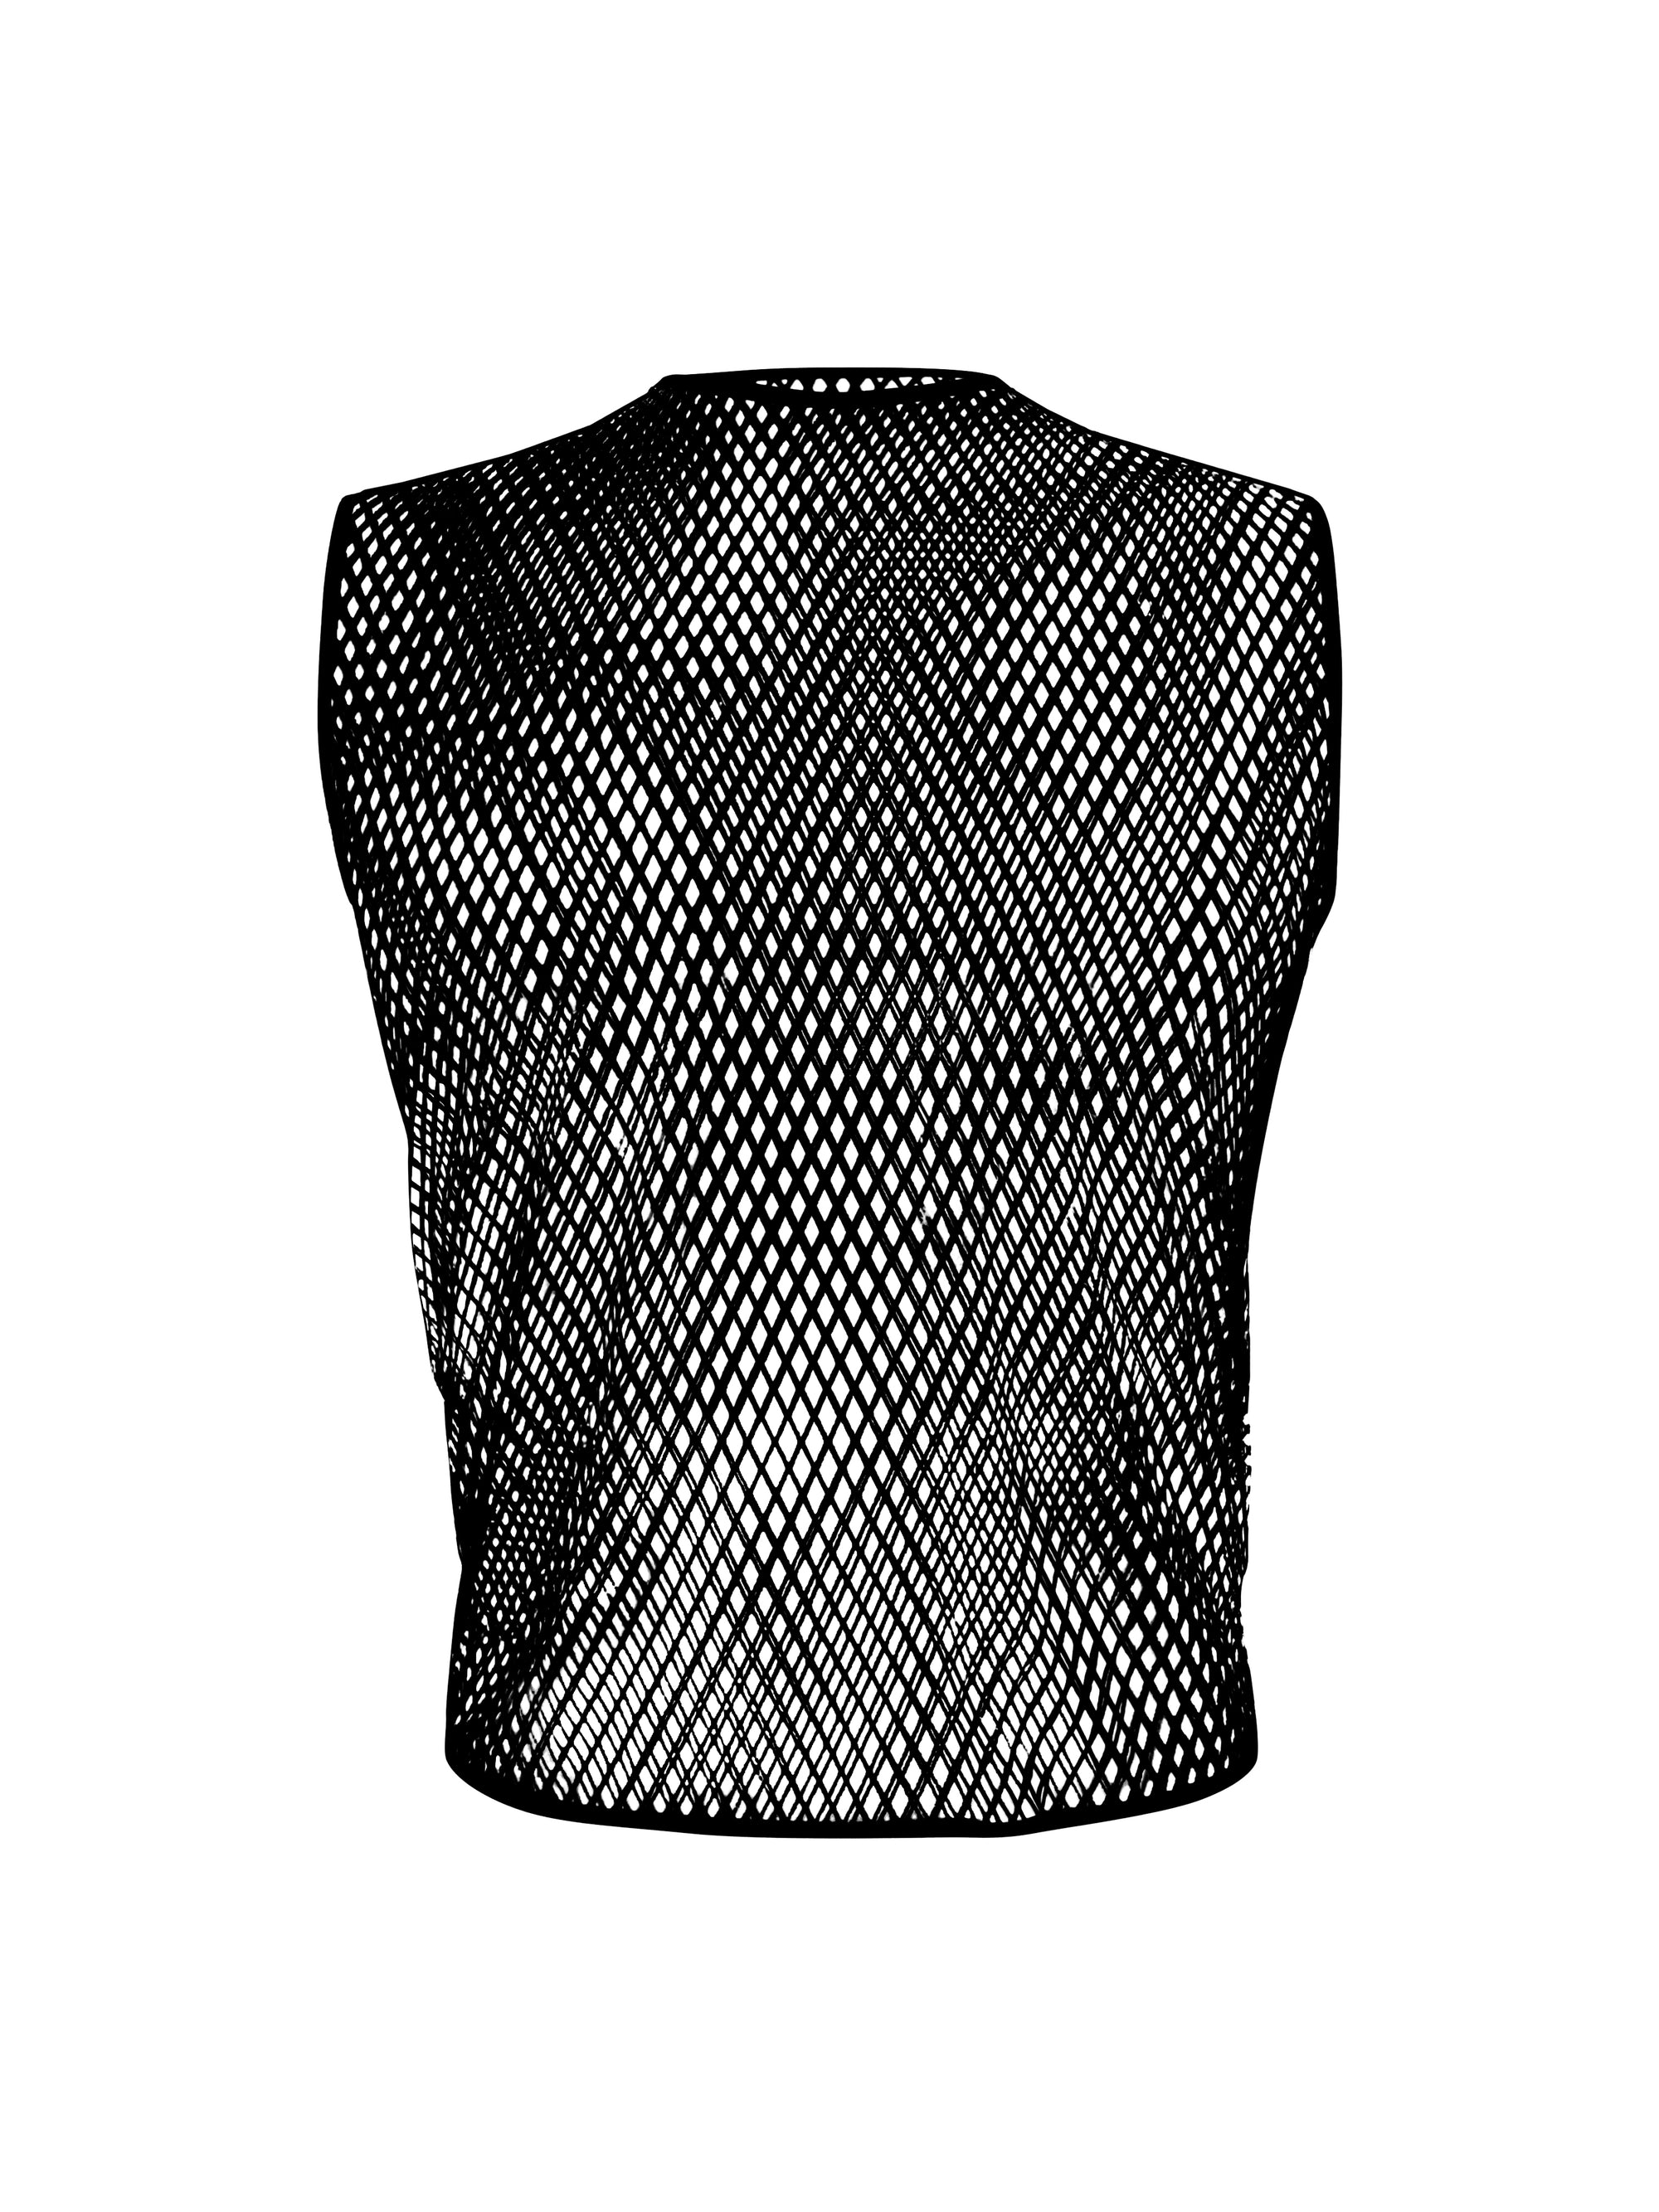 Fishnet Muscle T READY TO SHIP Medium / Black Mens - Vex Inc. | Latex Clothing